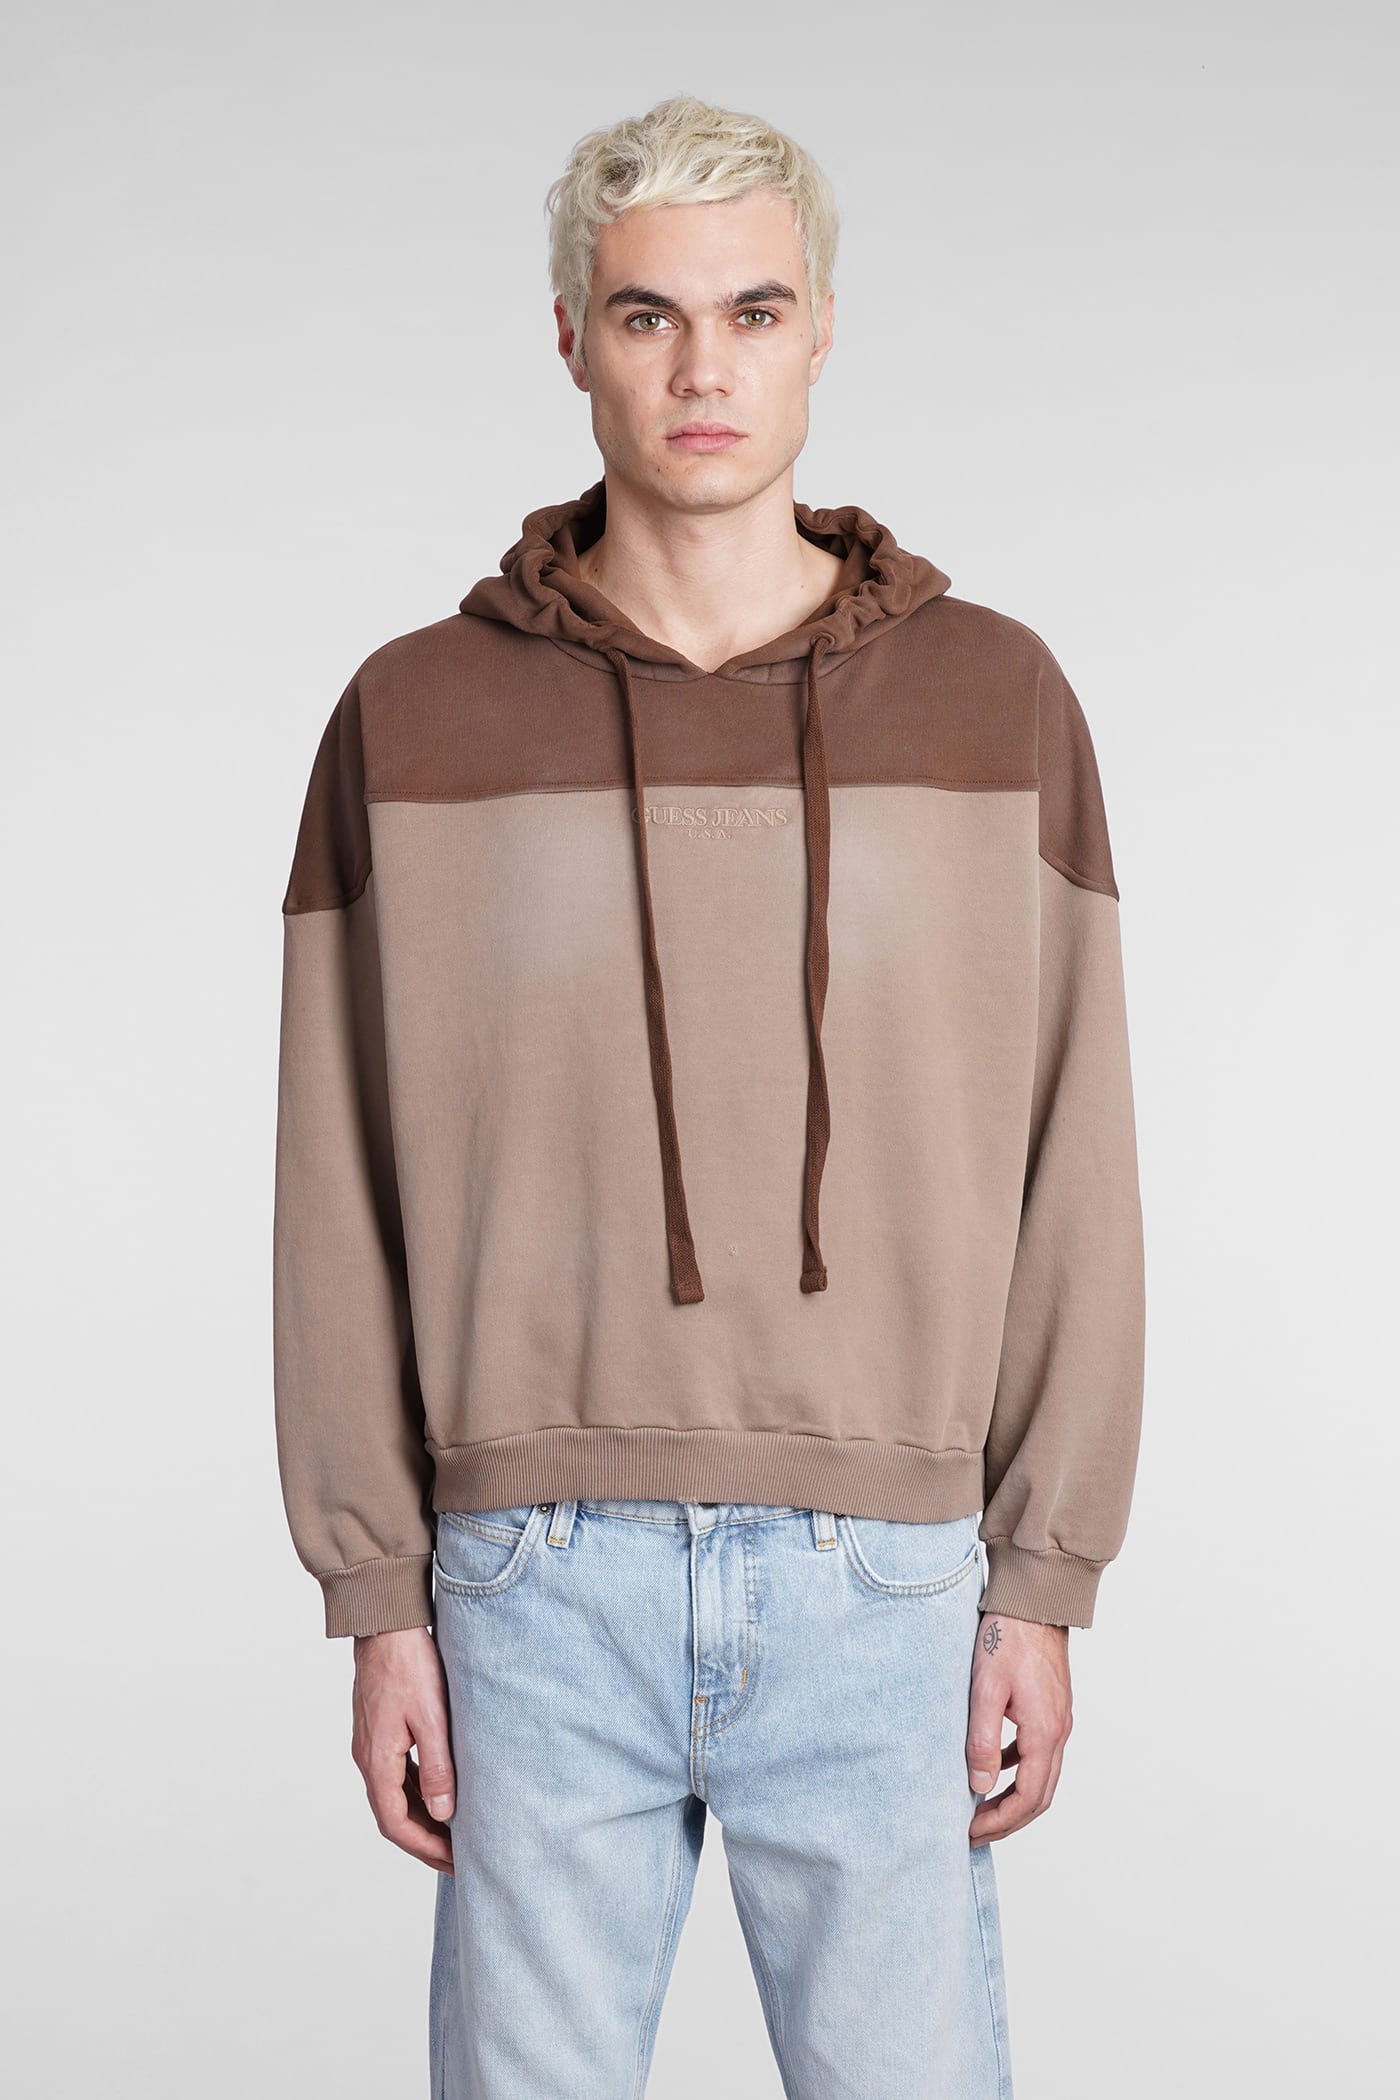 Guess Sweatshirt In Brown Cotton